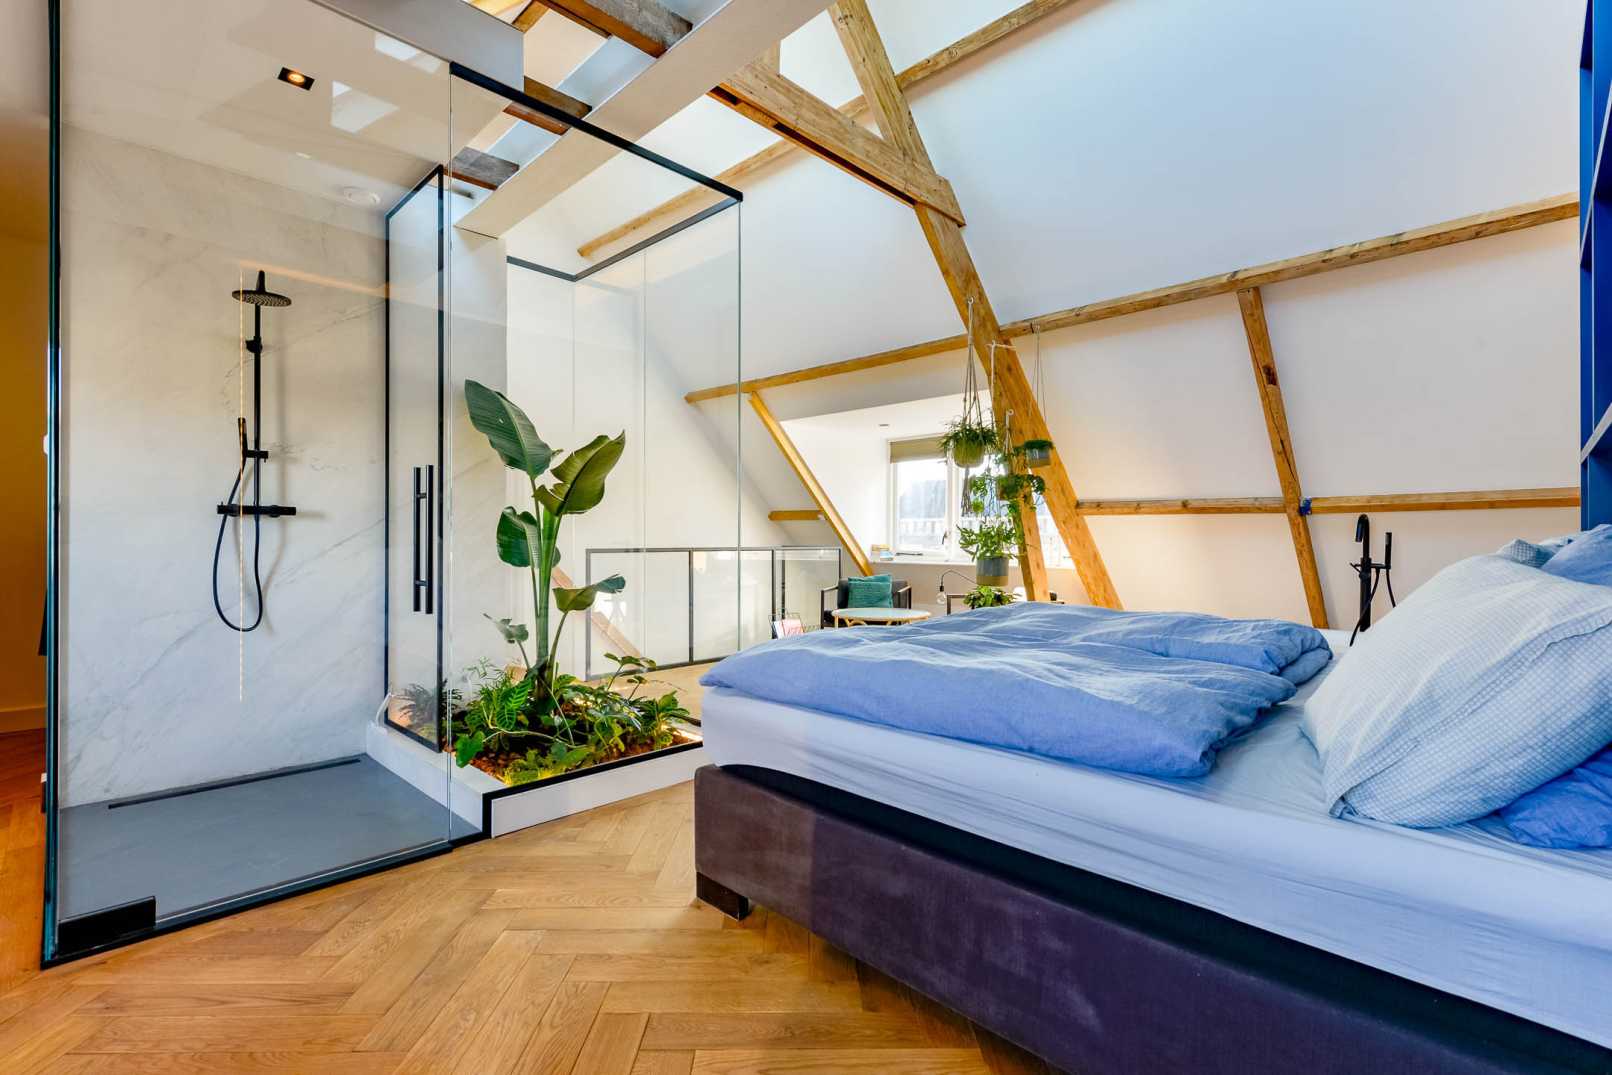 The Bedbathroom- Amsterdam - By Standard Studio